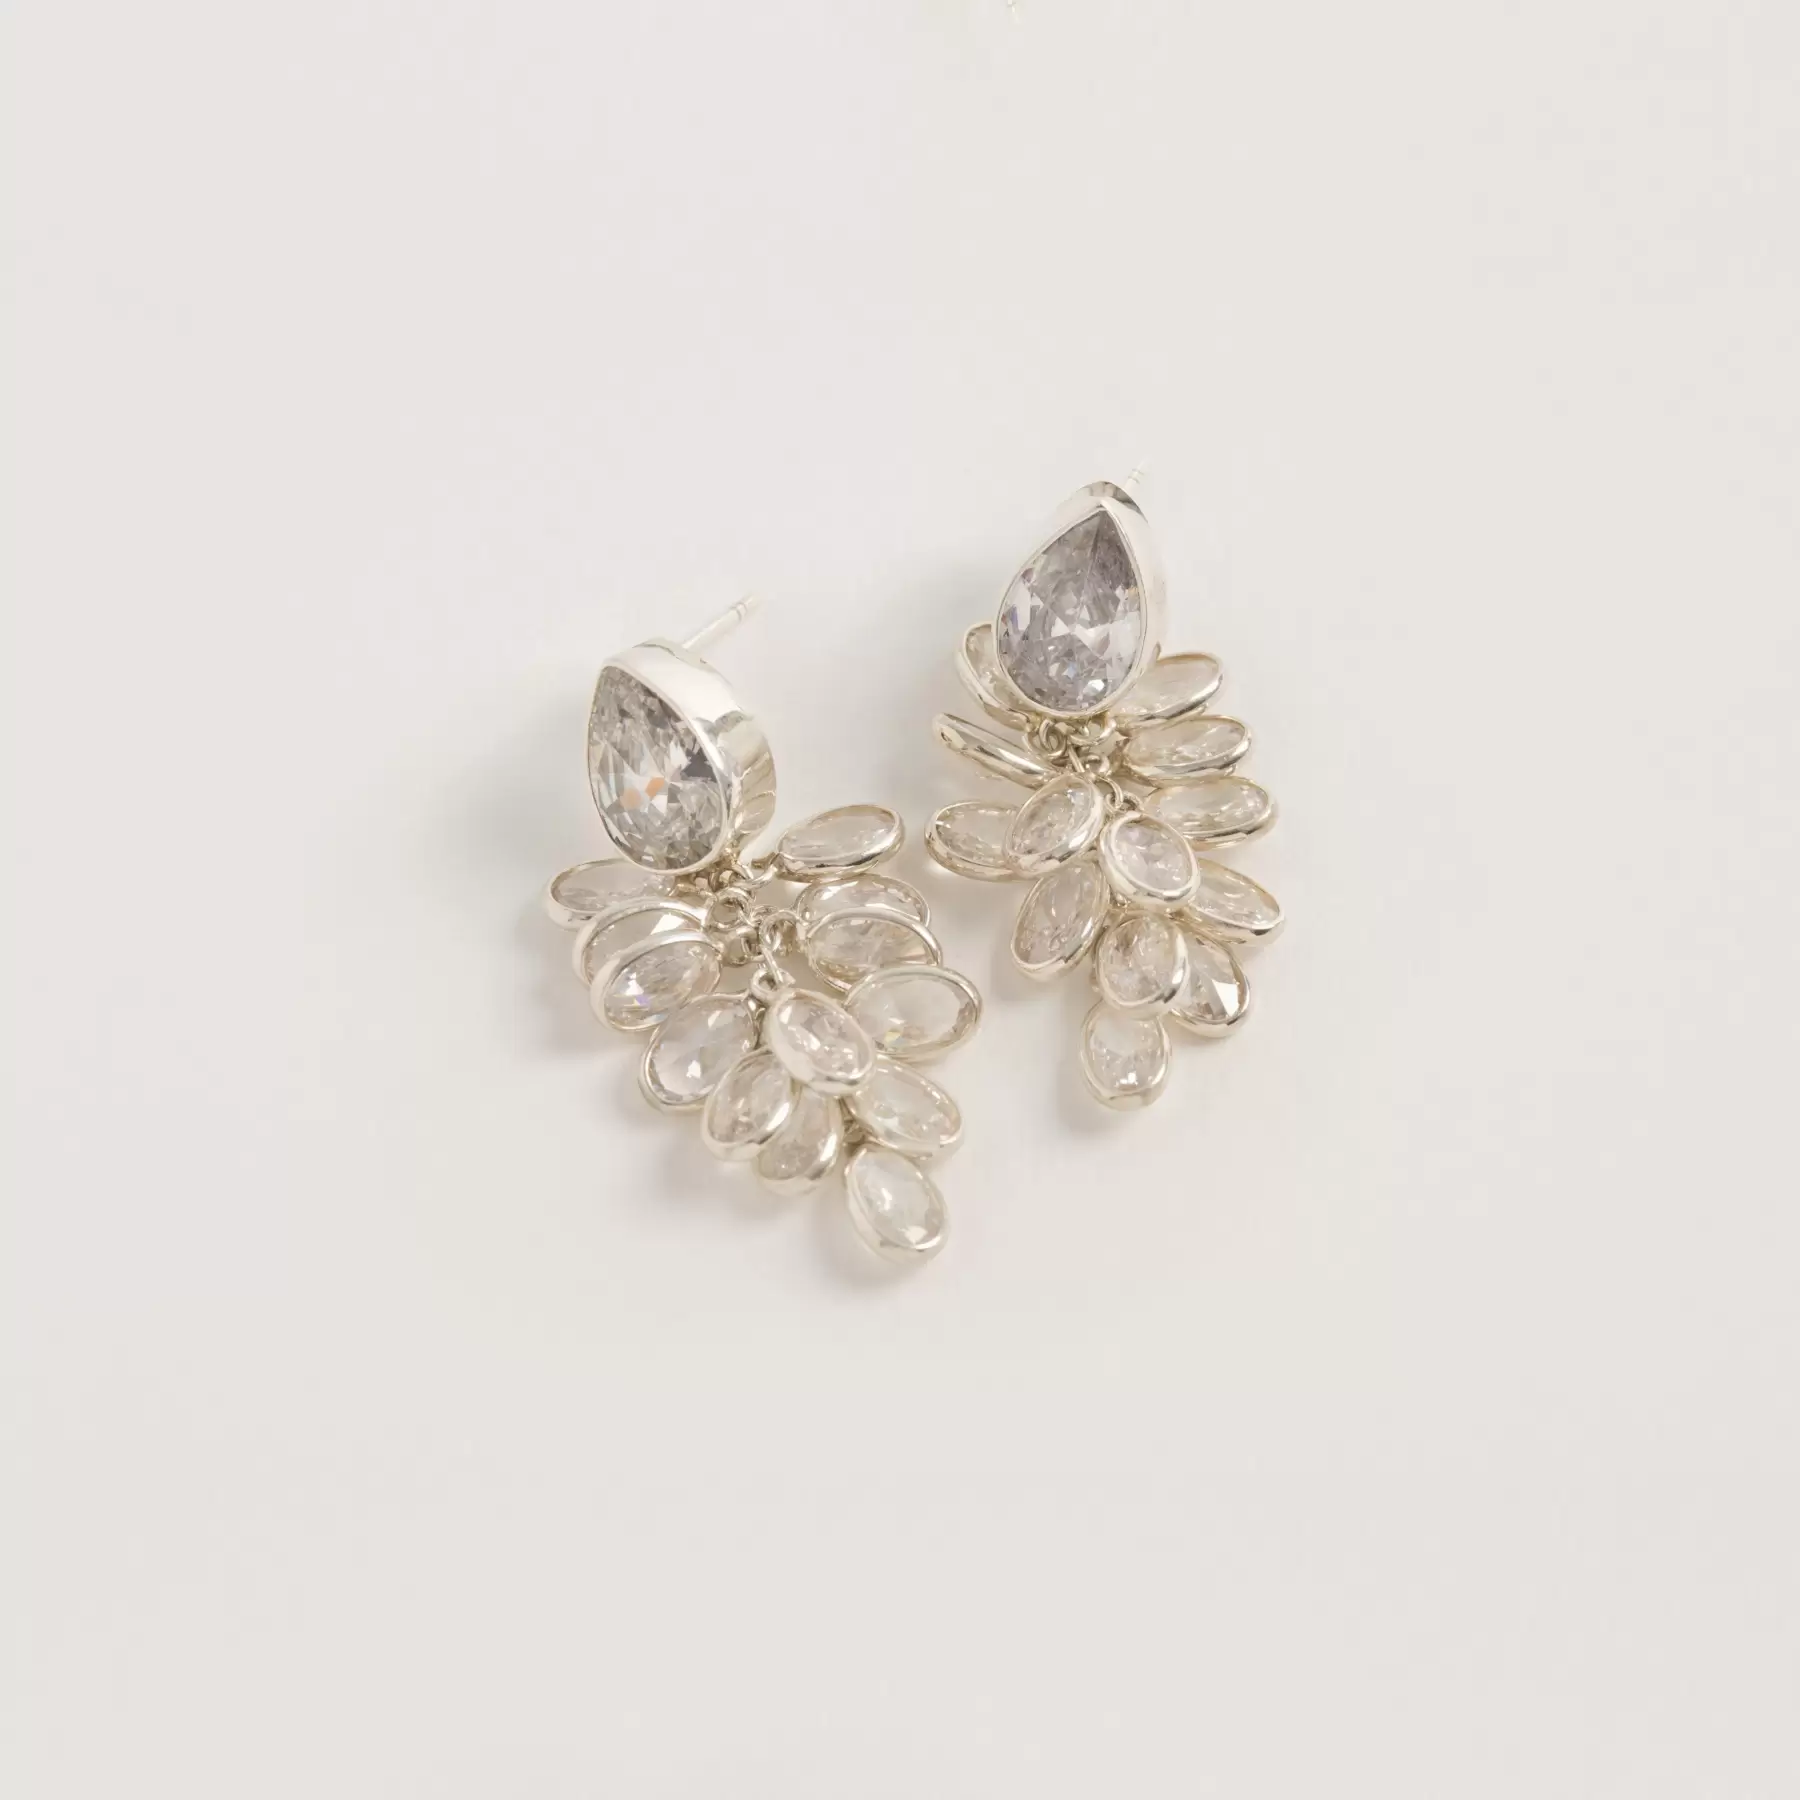 Petite Silver Crystal Drops Earrings